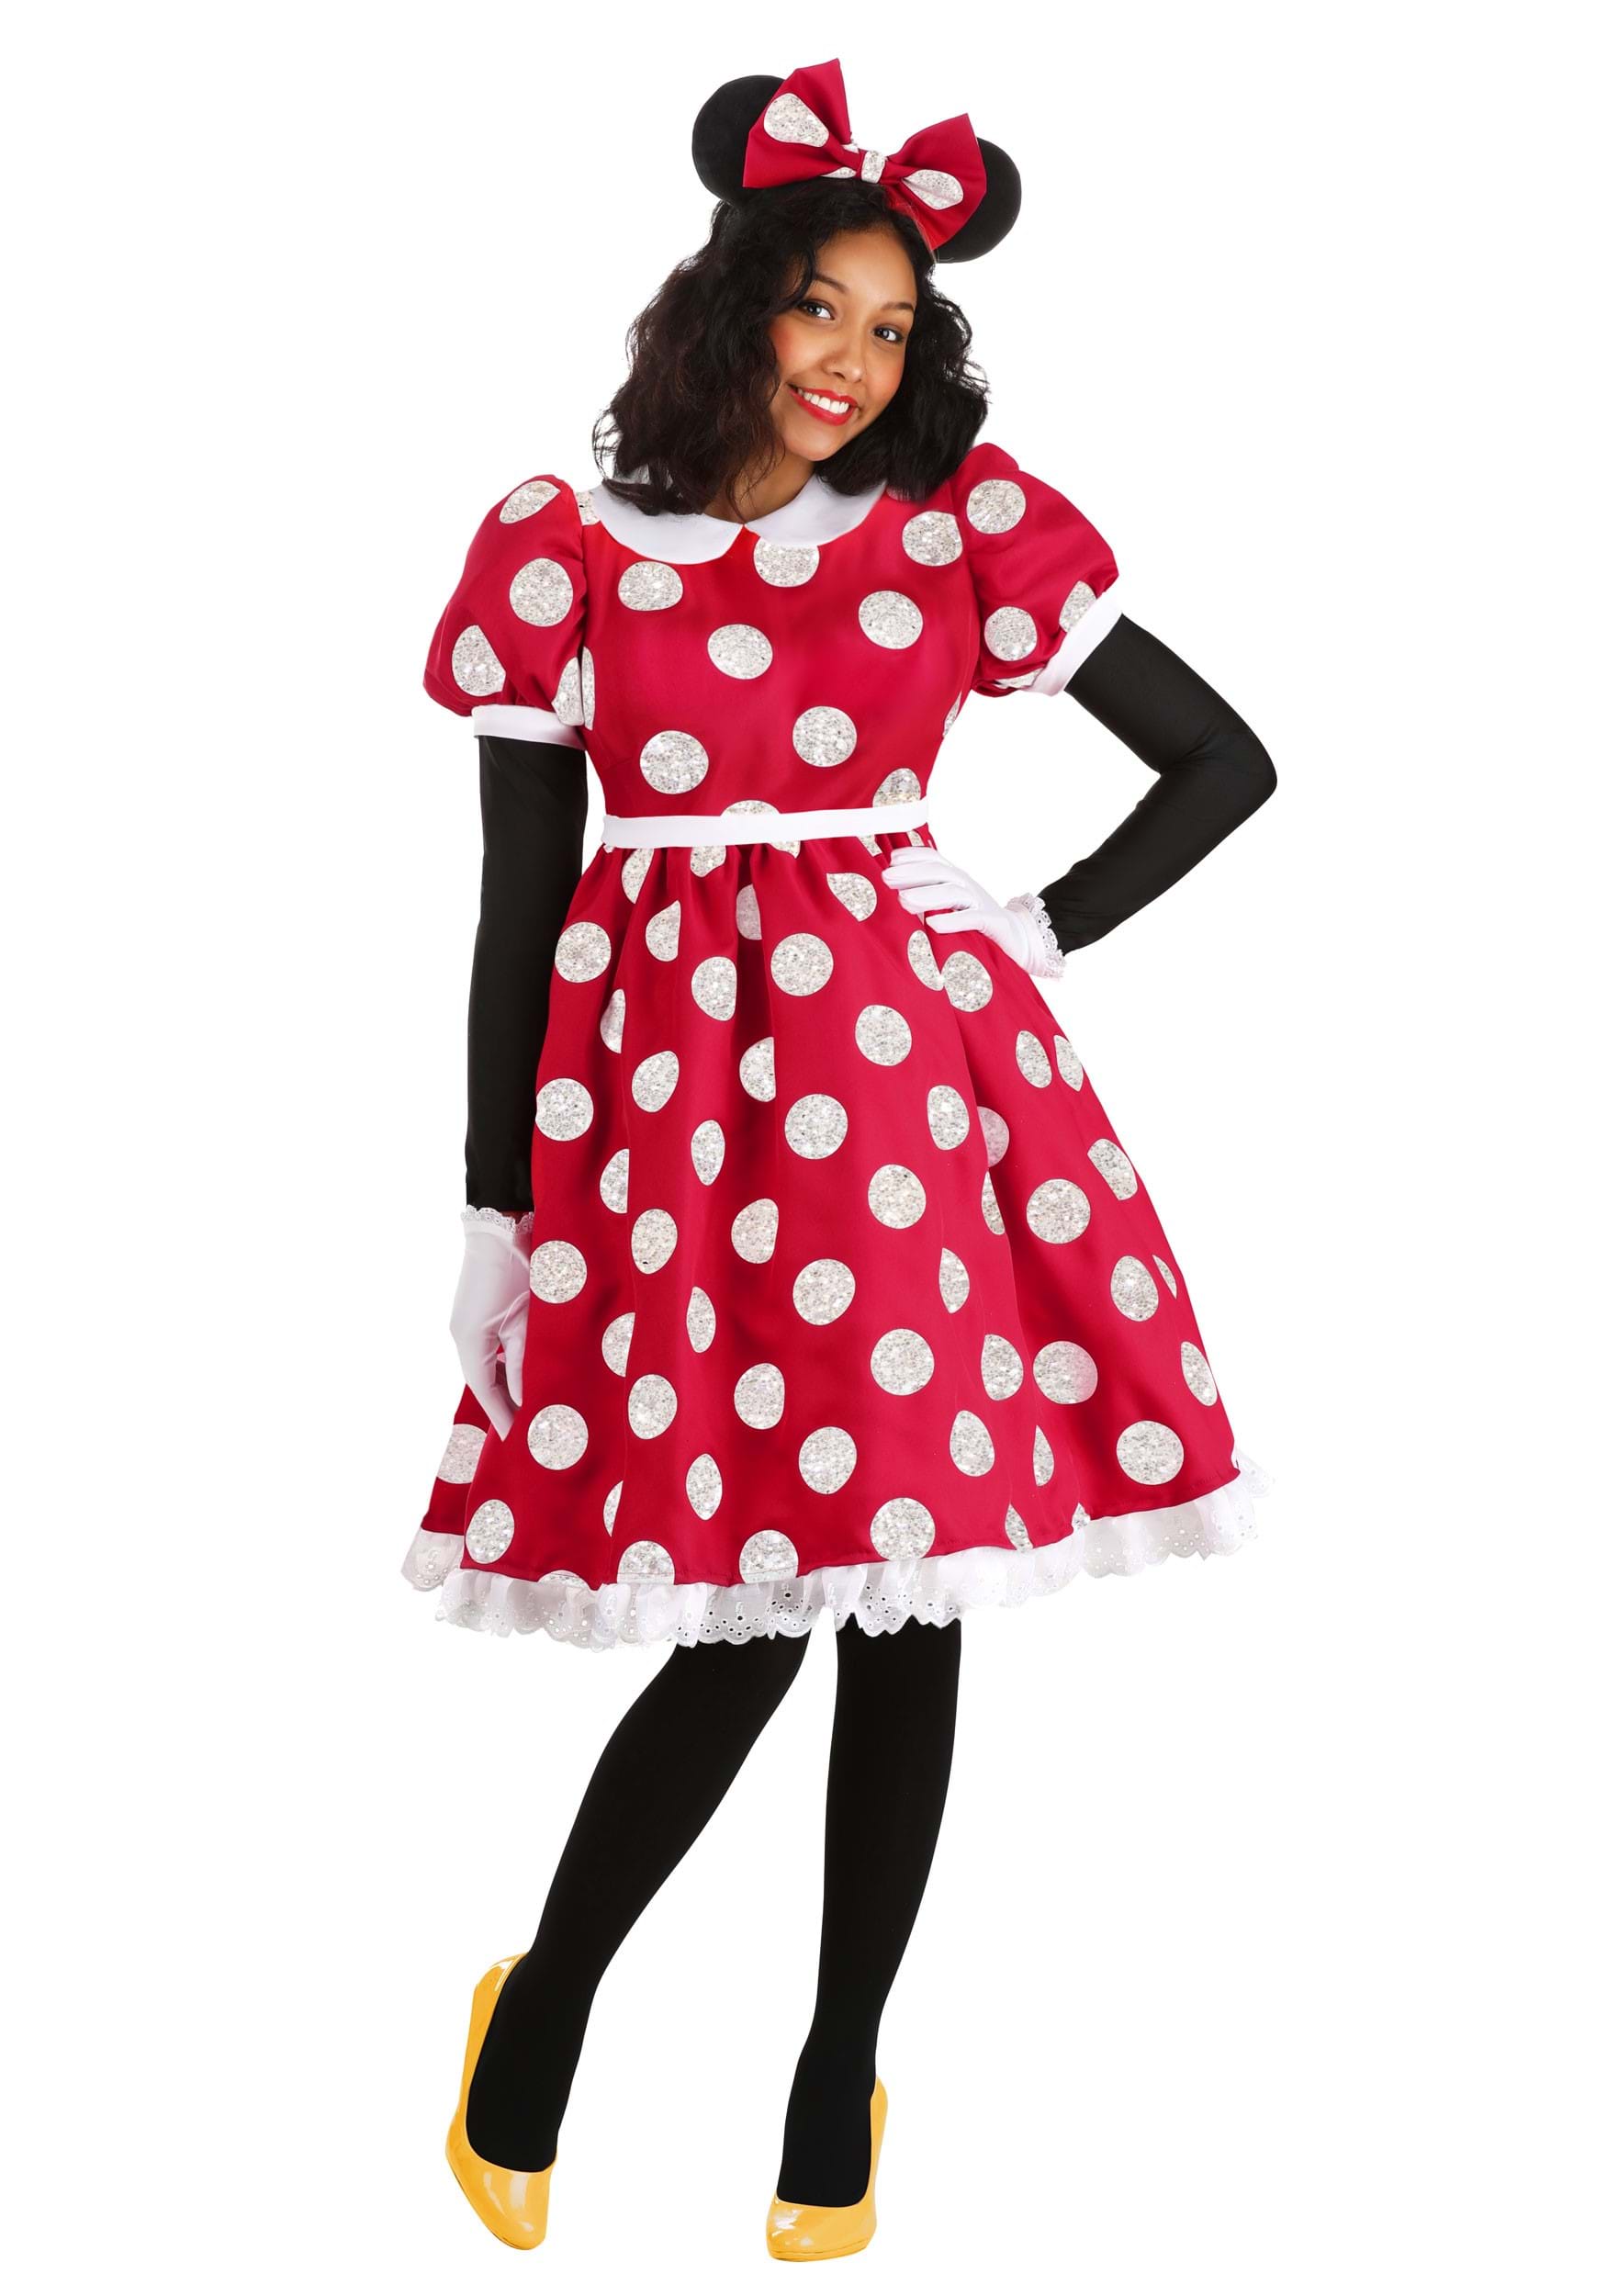 Deluxe Disney Minnie Mouse Women's Costume , Adult Disney Costumes